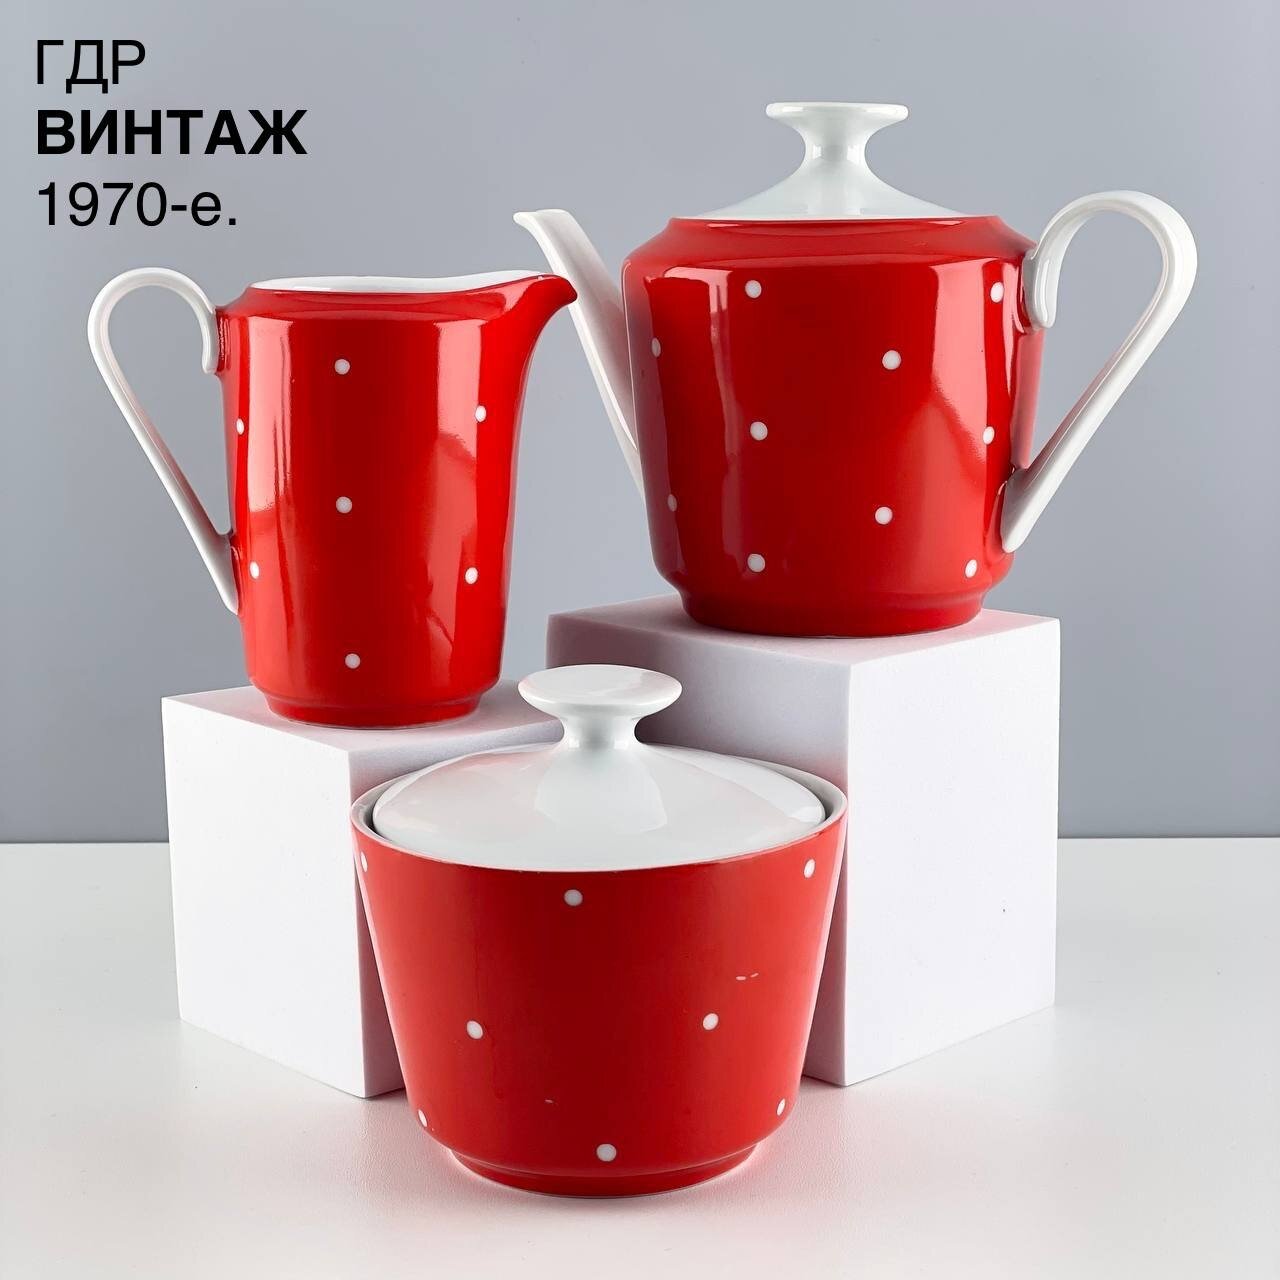 Винтажный чайный набор (чайник, сахарница, молочник) "Горошек". Фарфор Kahla. ГДР, 1970-е.